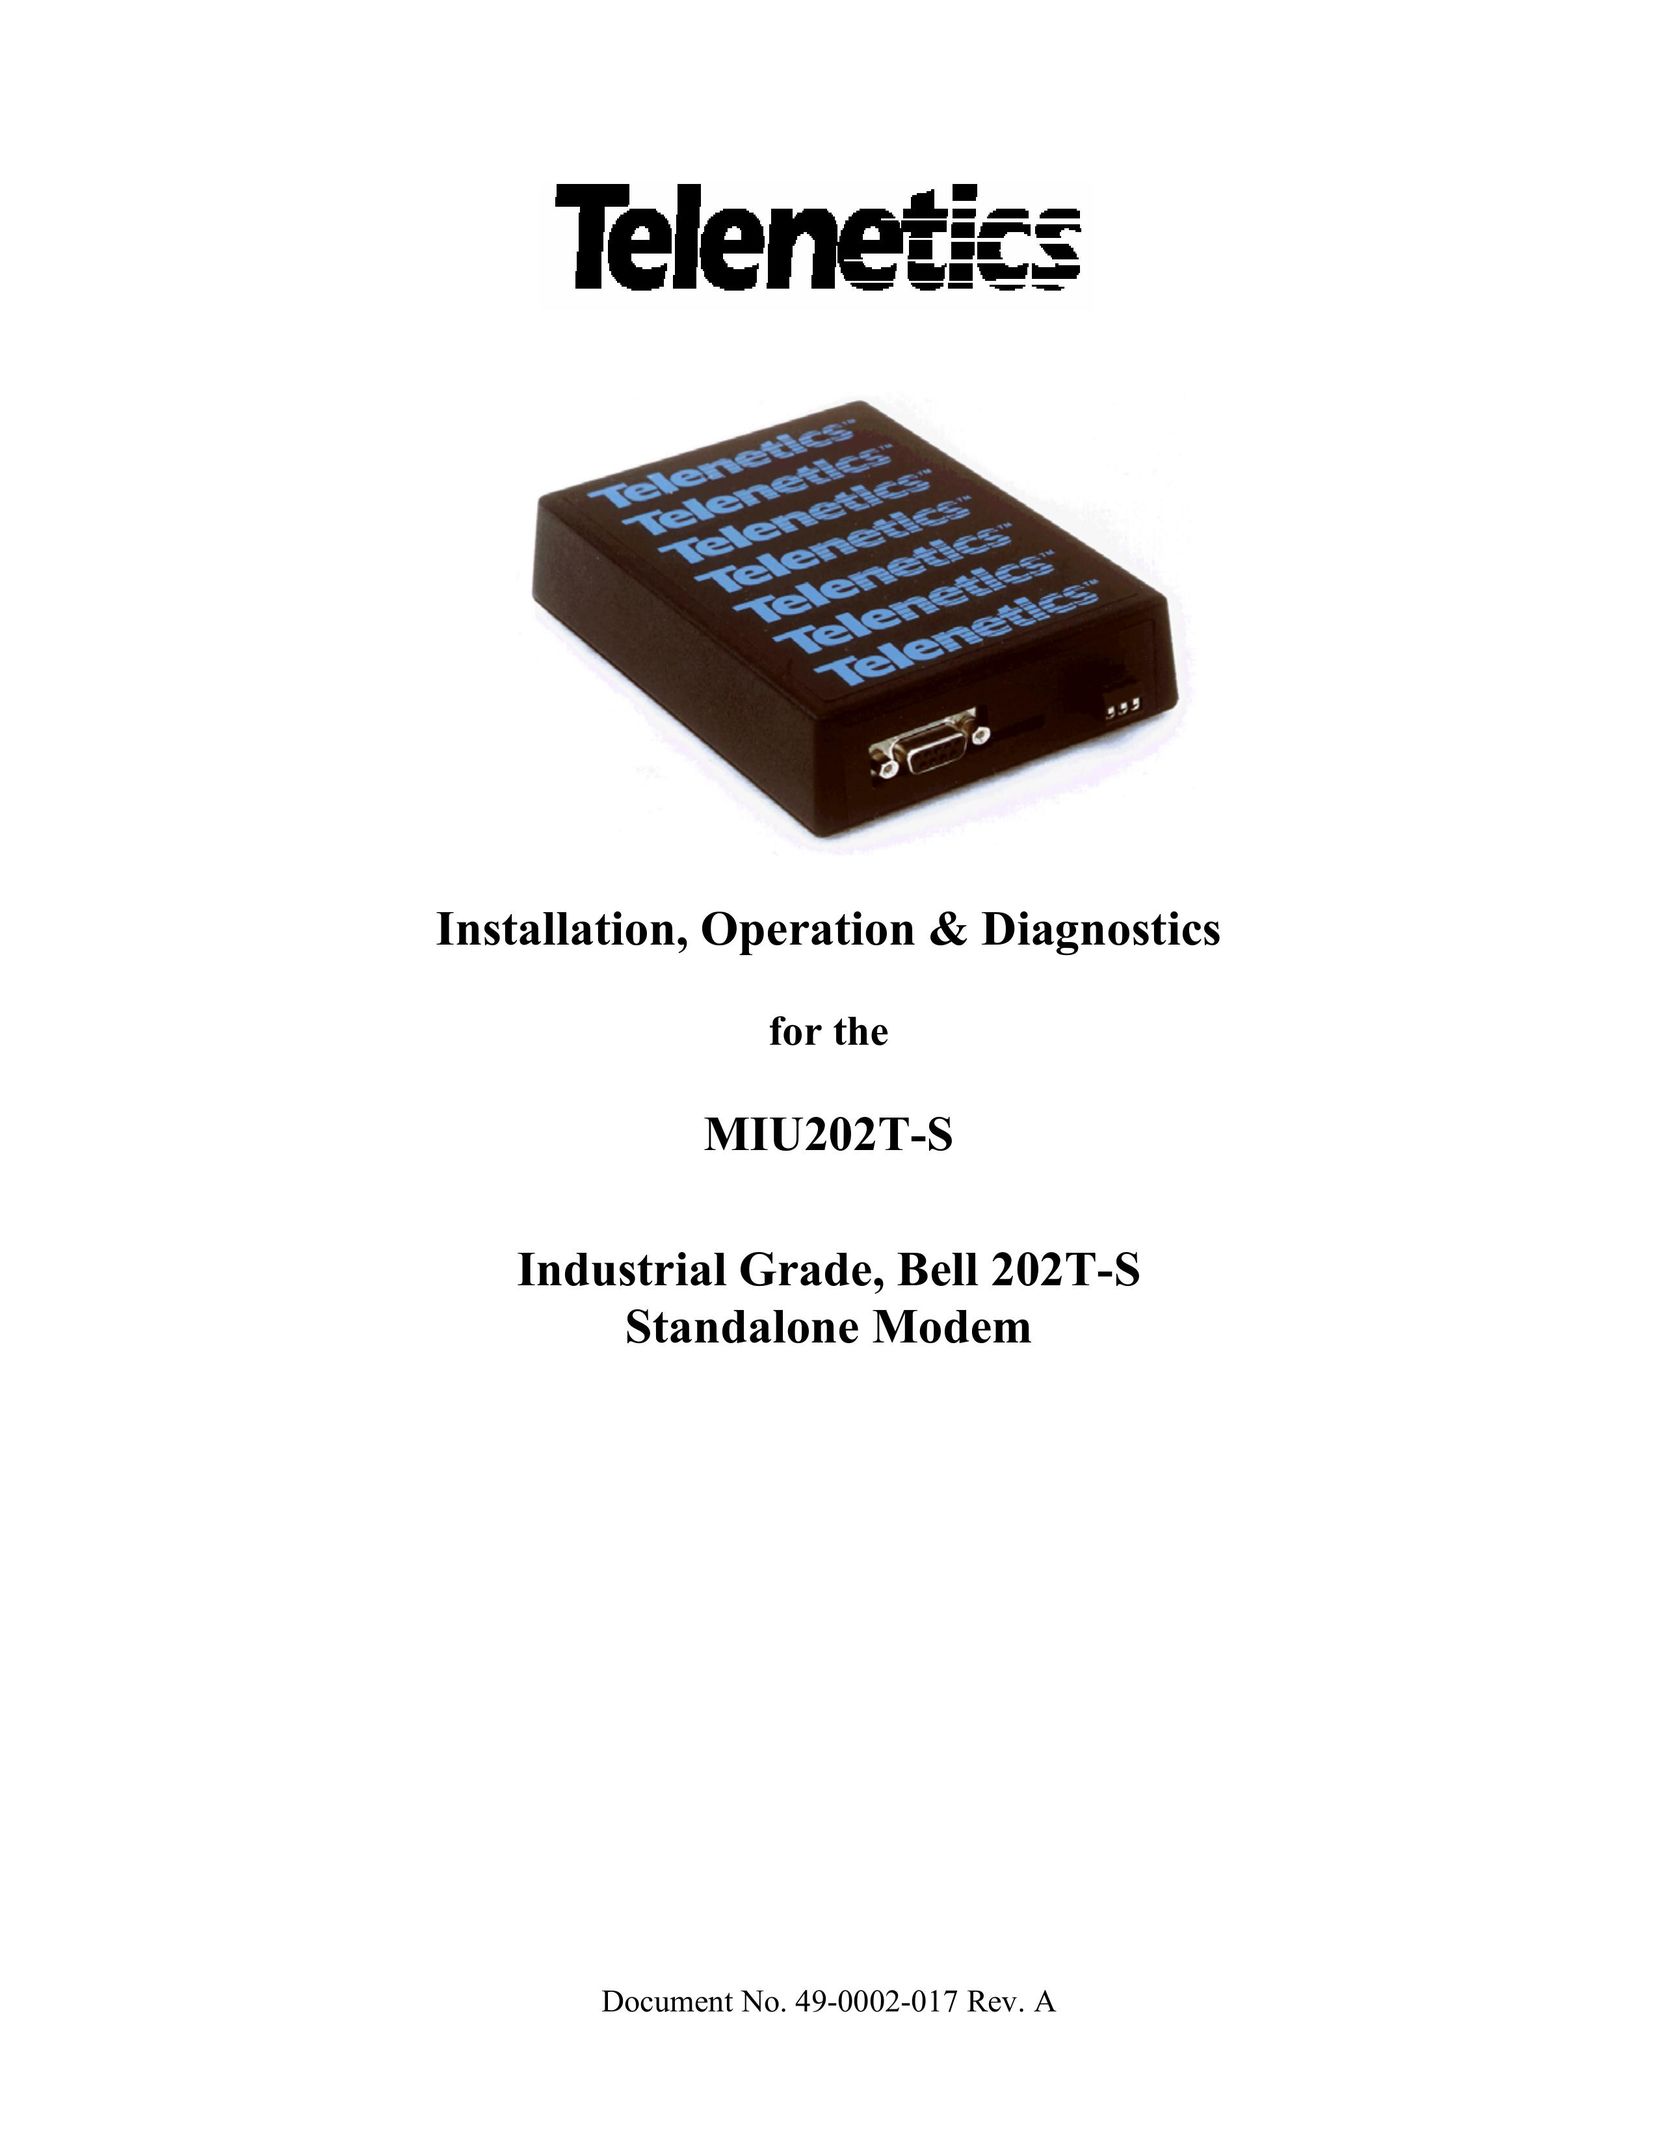 Telenetics MIU202T-S Network Card User Manual